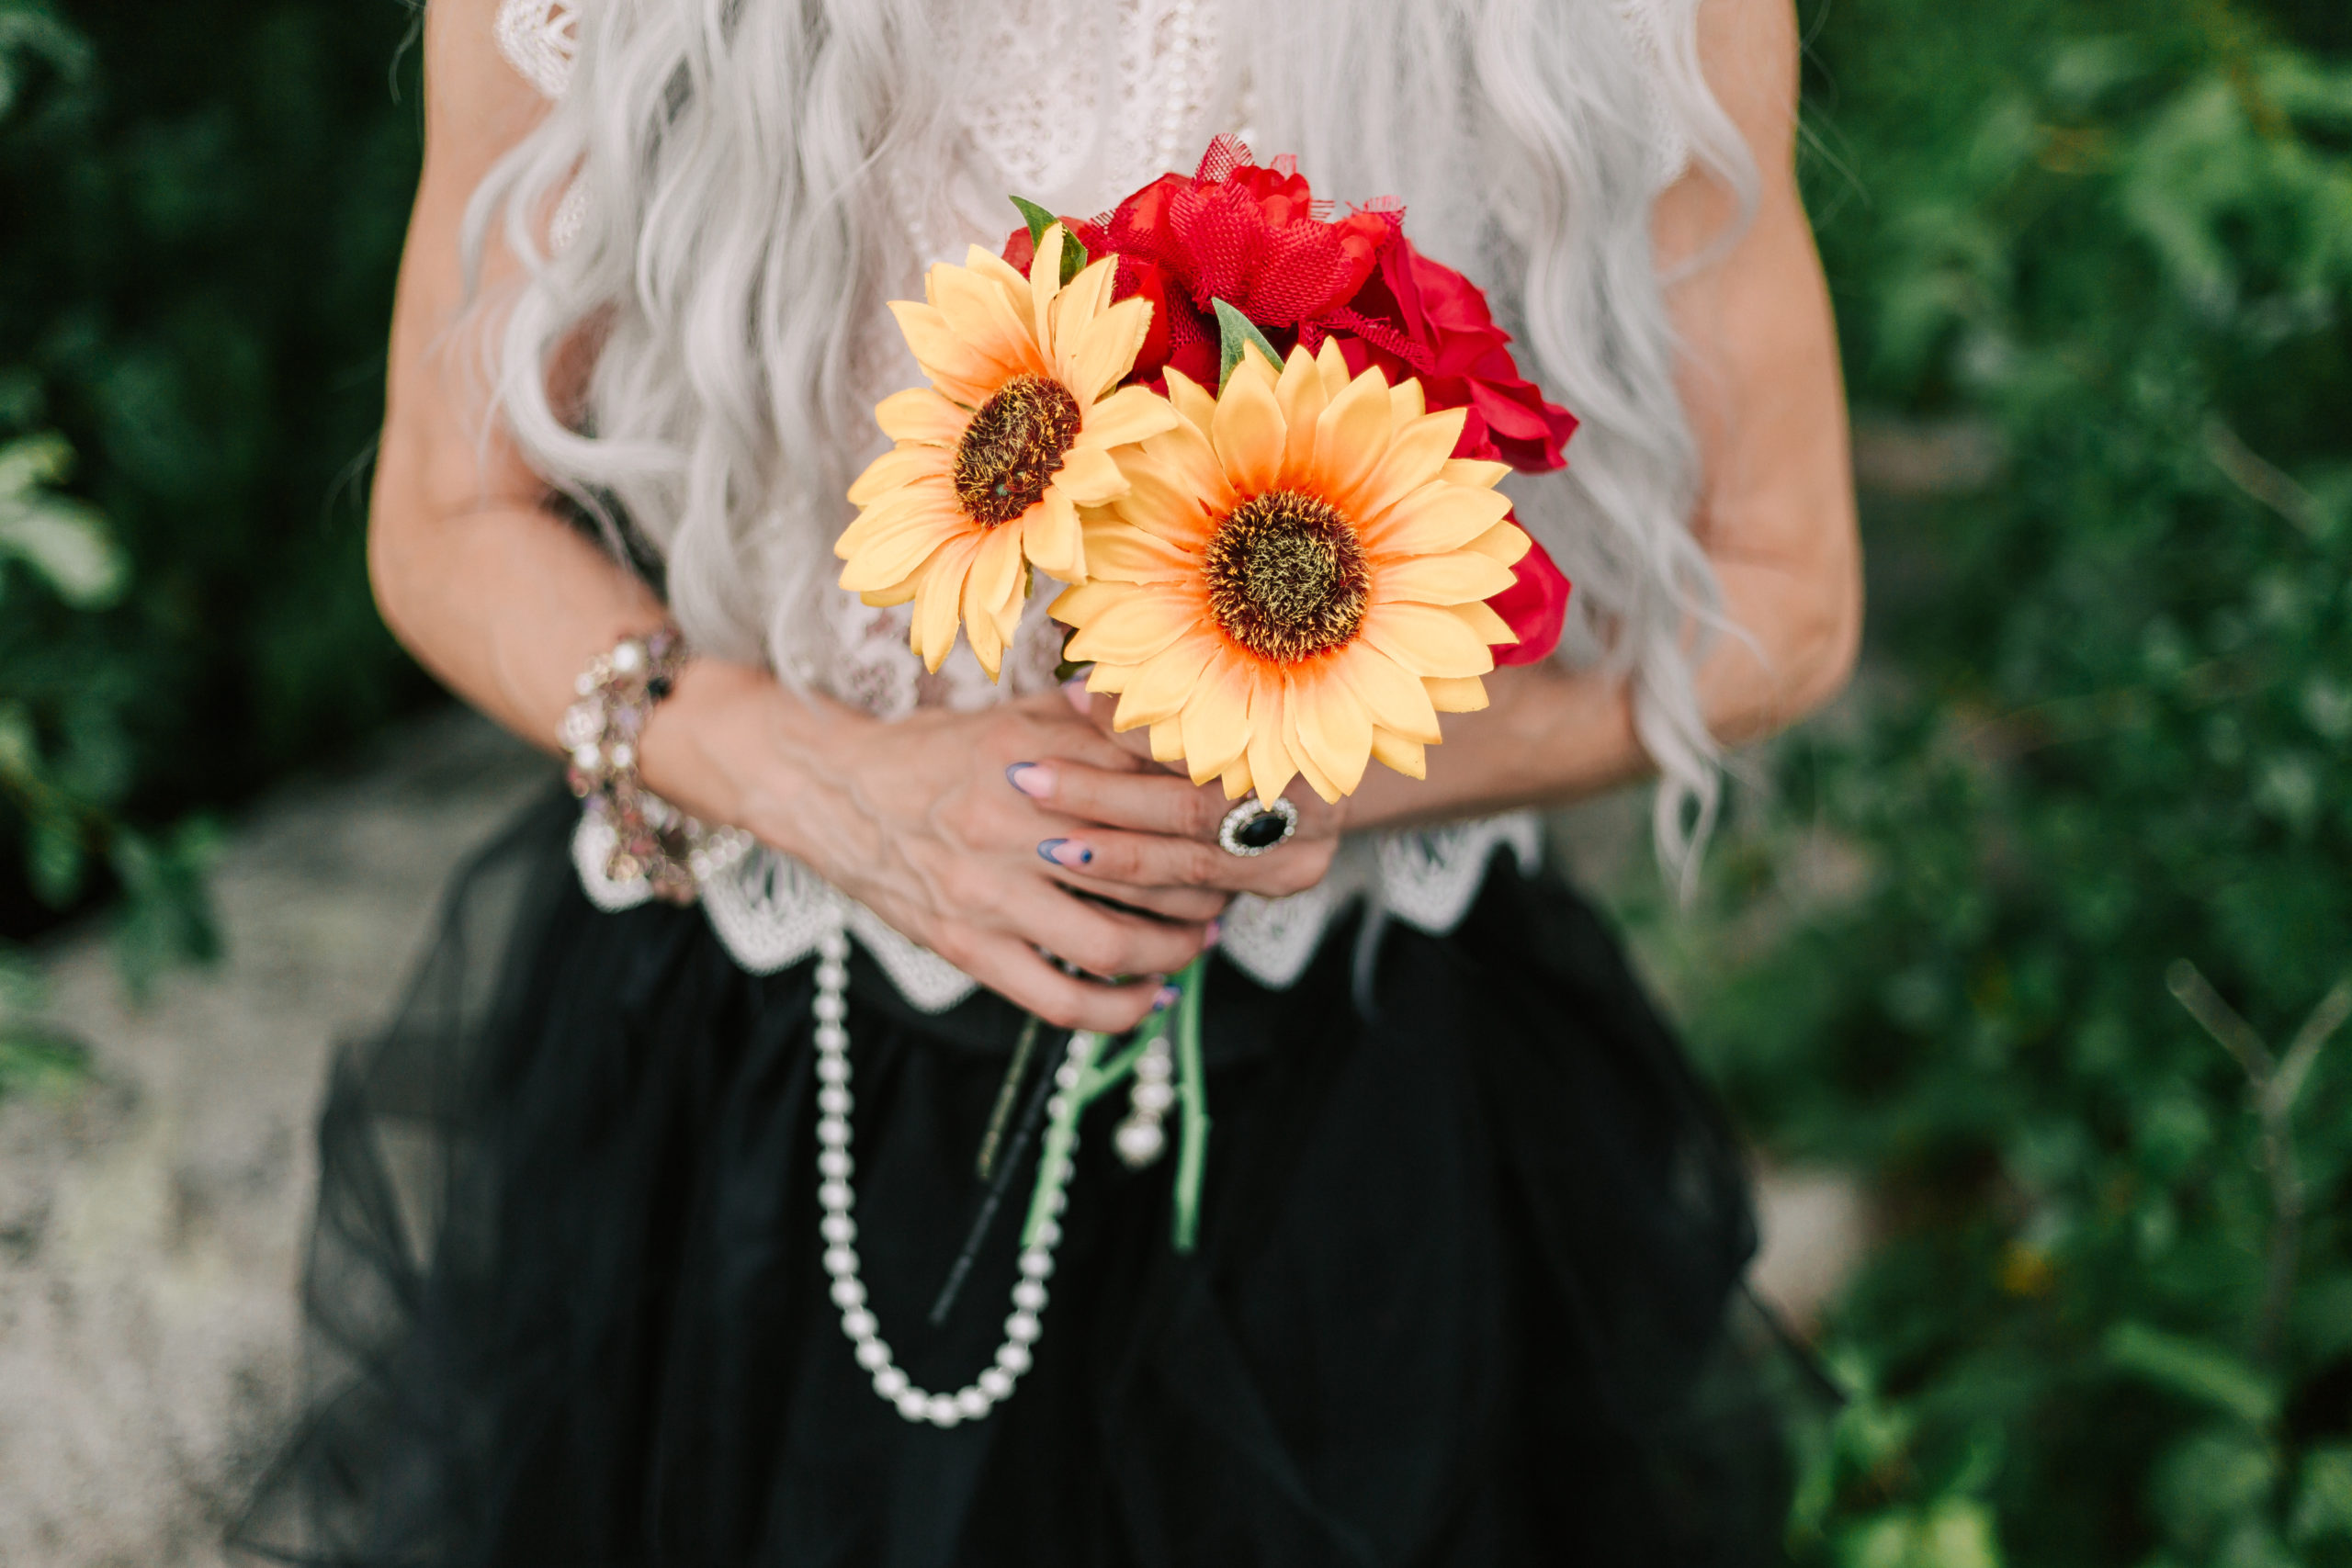 alternative bride holding a sunflower bouquet at a Friendly Crossways wedding